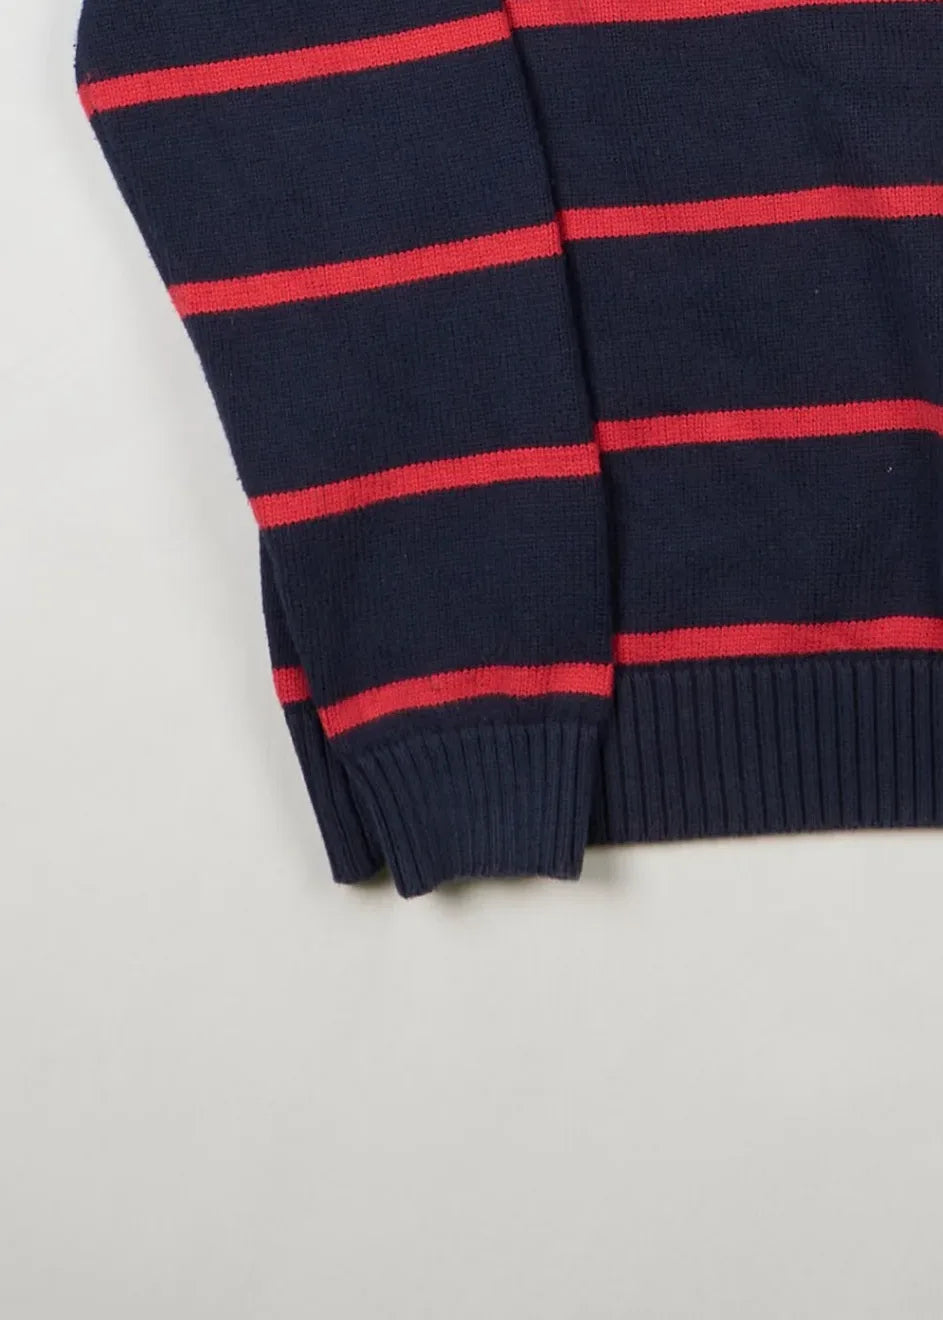 Ralph Lauren - Sweater (M) Bottom Left